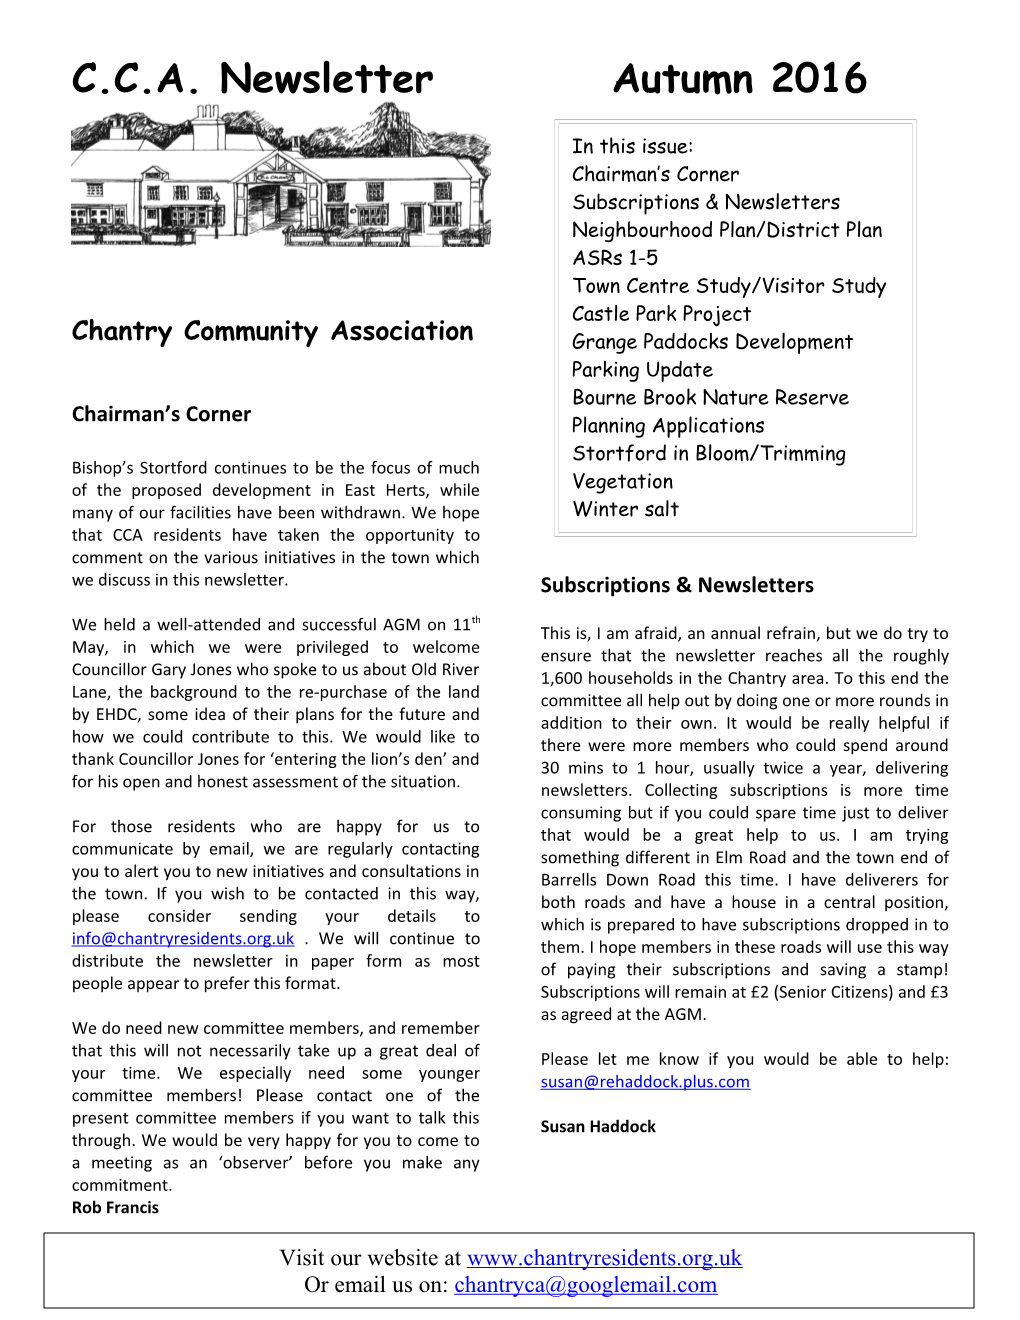 Chantry Community Association